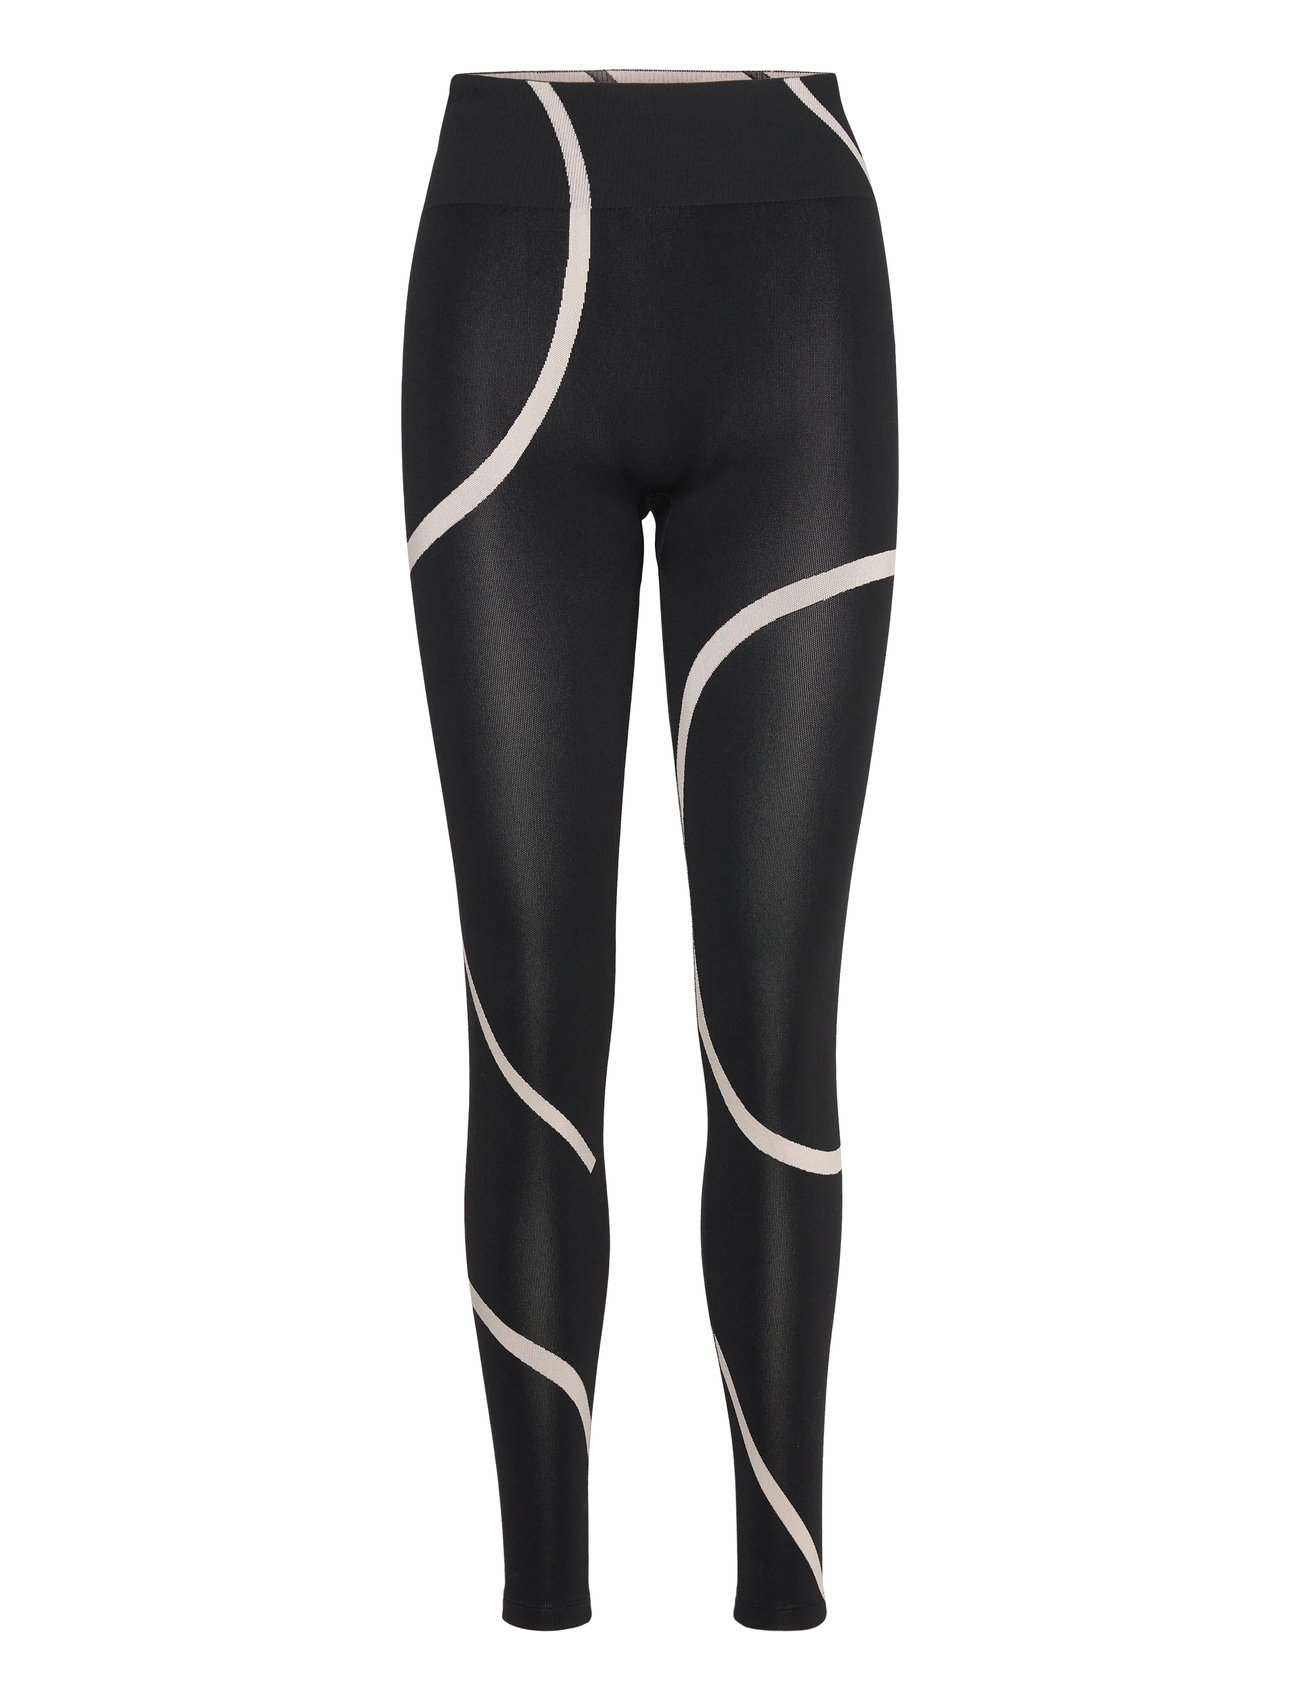 Loud Logo Legging Sport Running-training Tights Seamless Tights Black Moonchild Yoga Wear